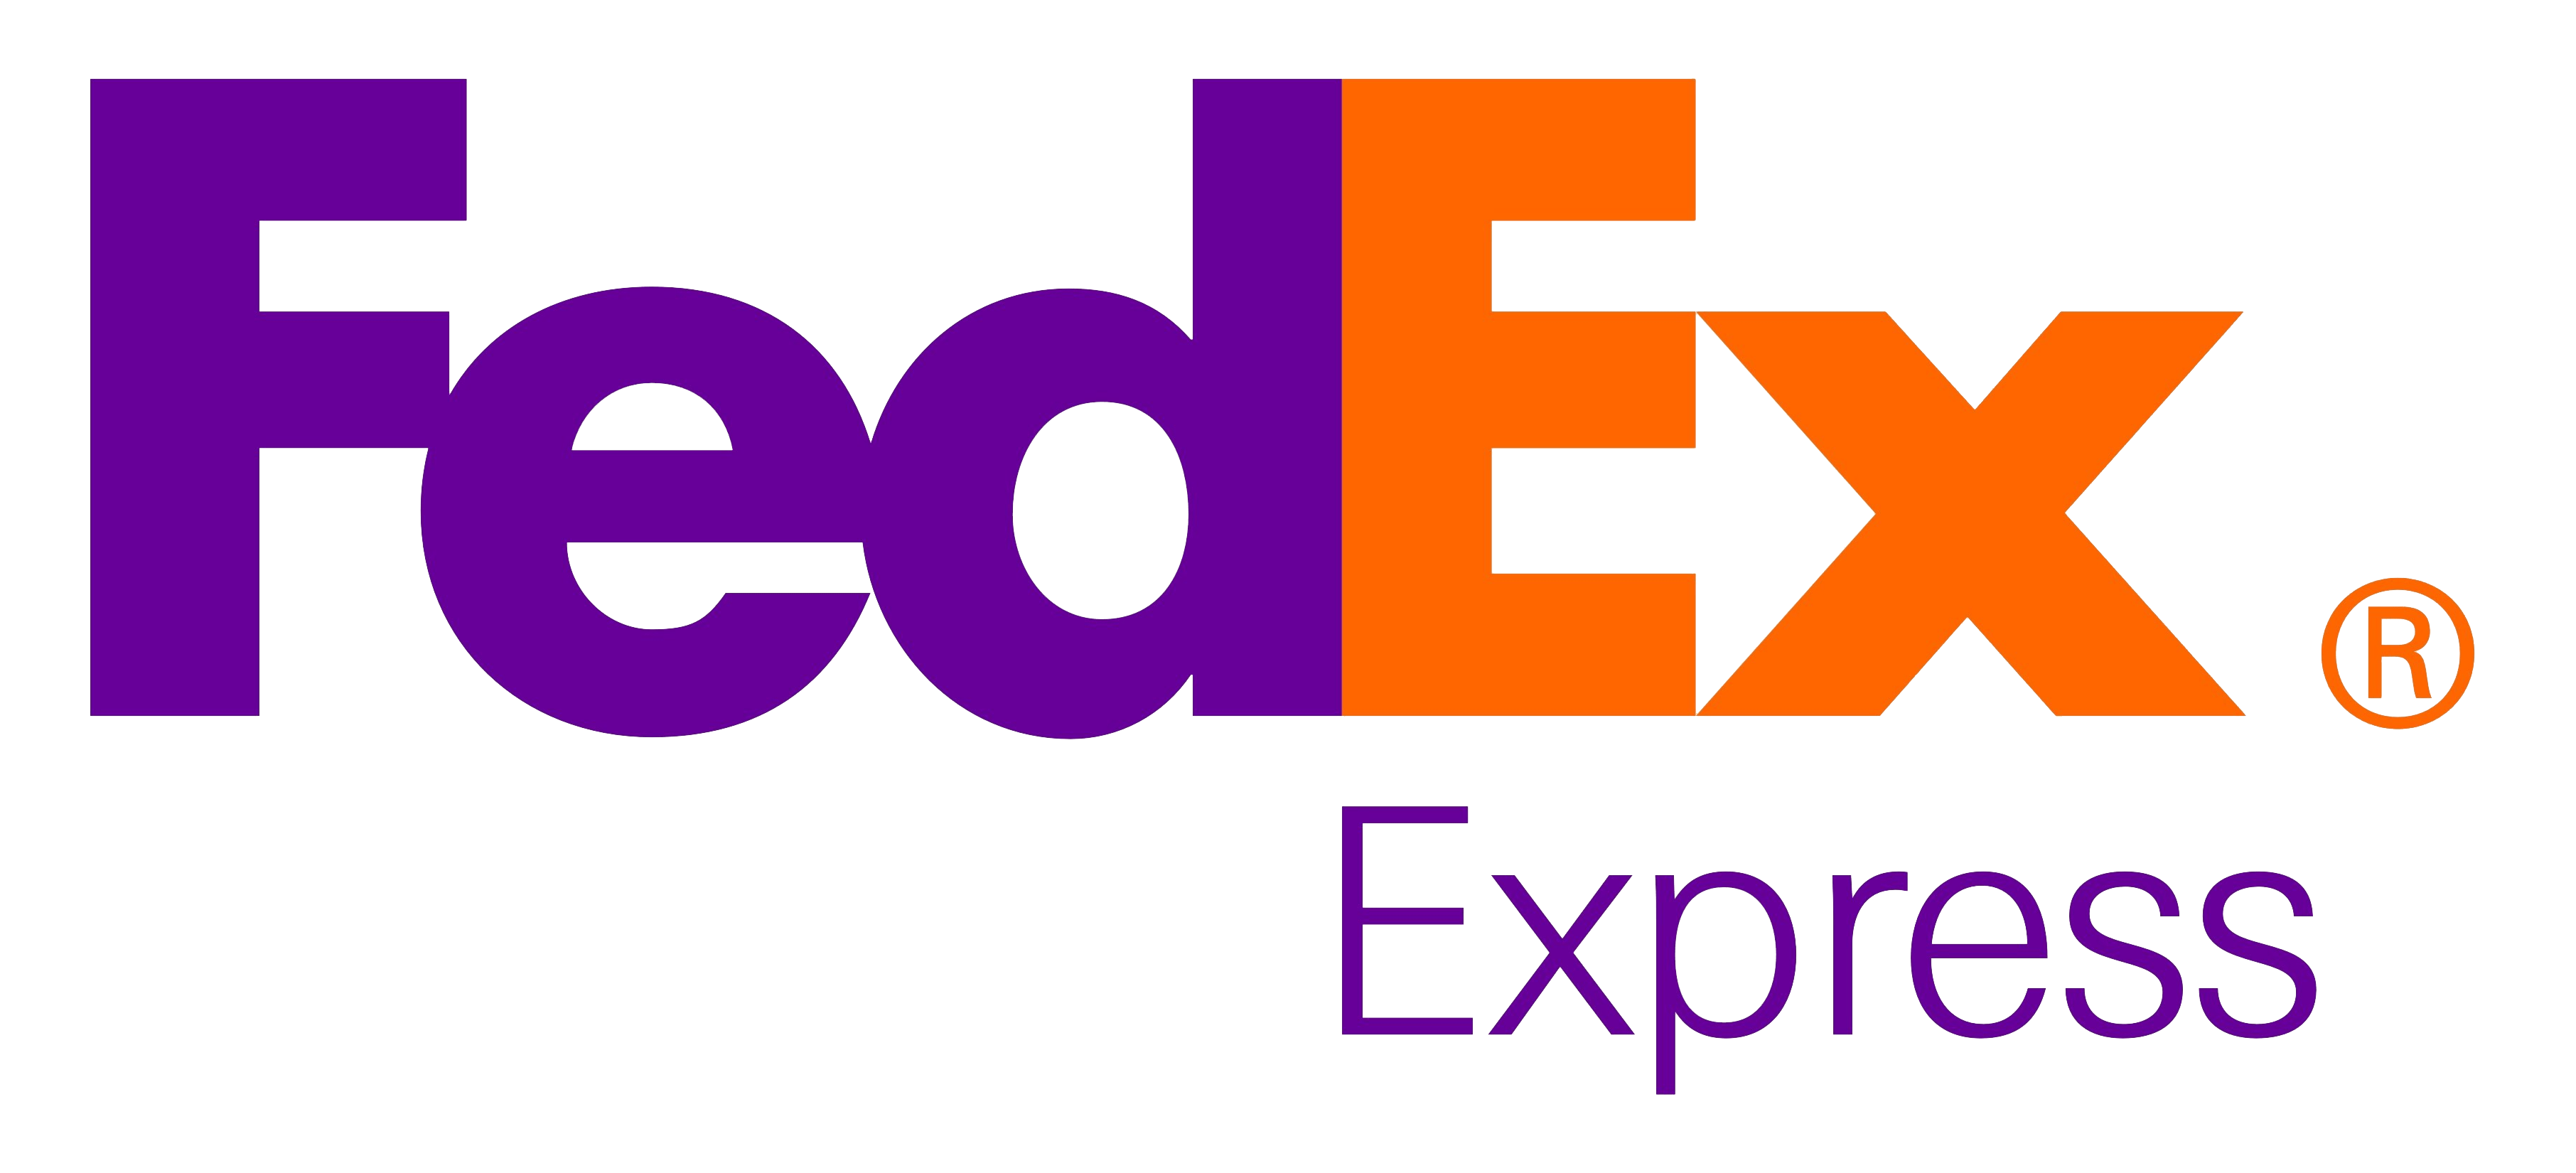 Express Brand Logo - FedEx Express Logo PNG Image. Free transparent CC0 PNG